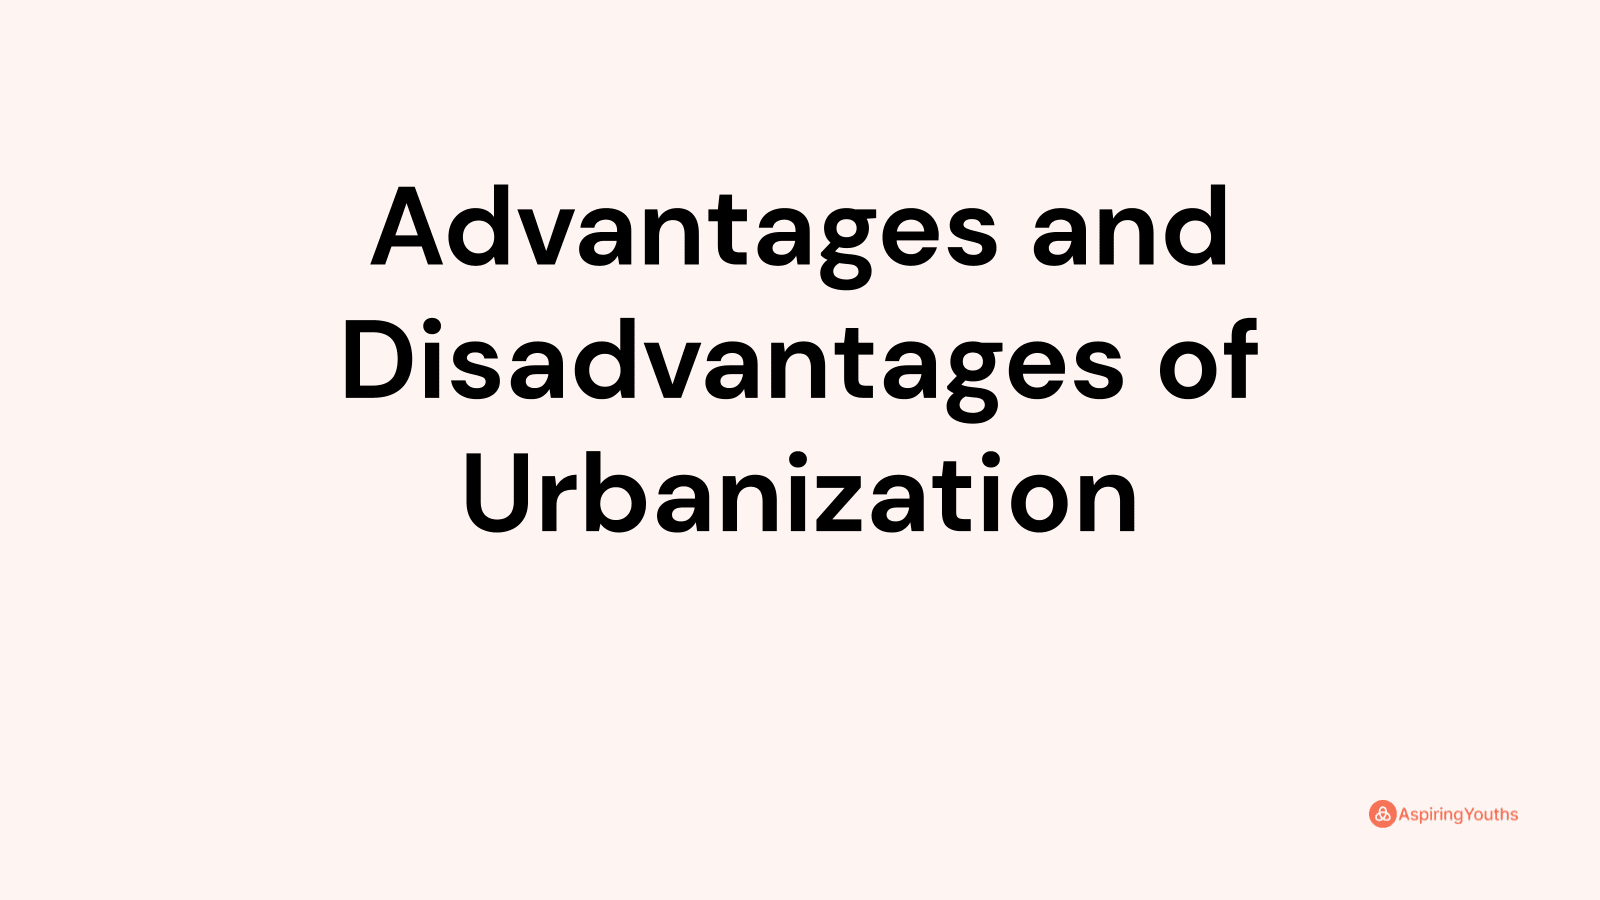 Advantages and disadvantages of Urbanization